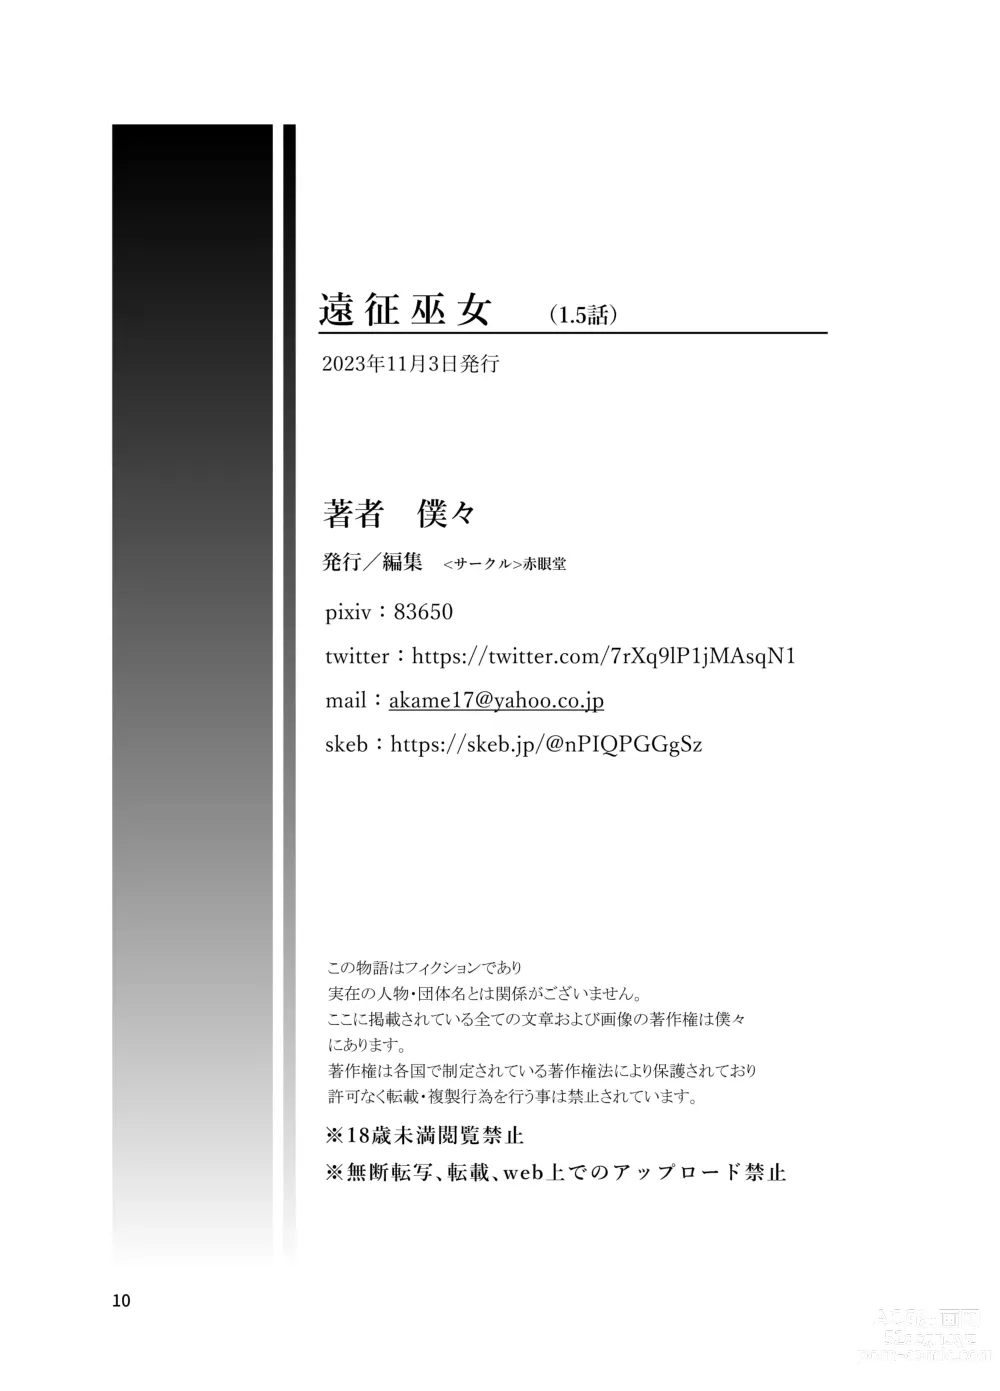 Page 10 of doujinshi Ensei Miko 1.5 Aru Hi no Miko JK [Digital